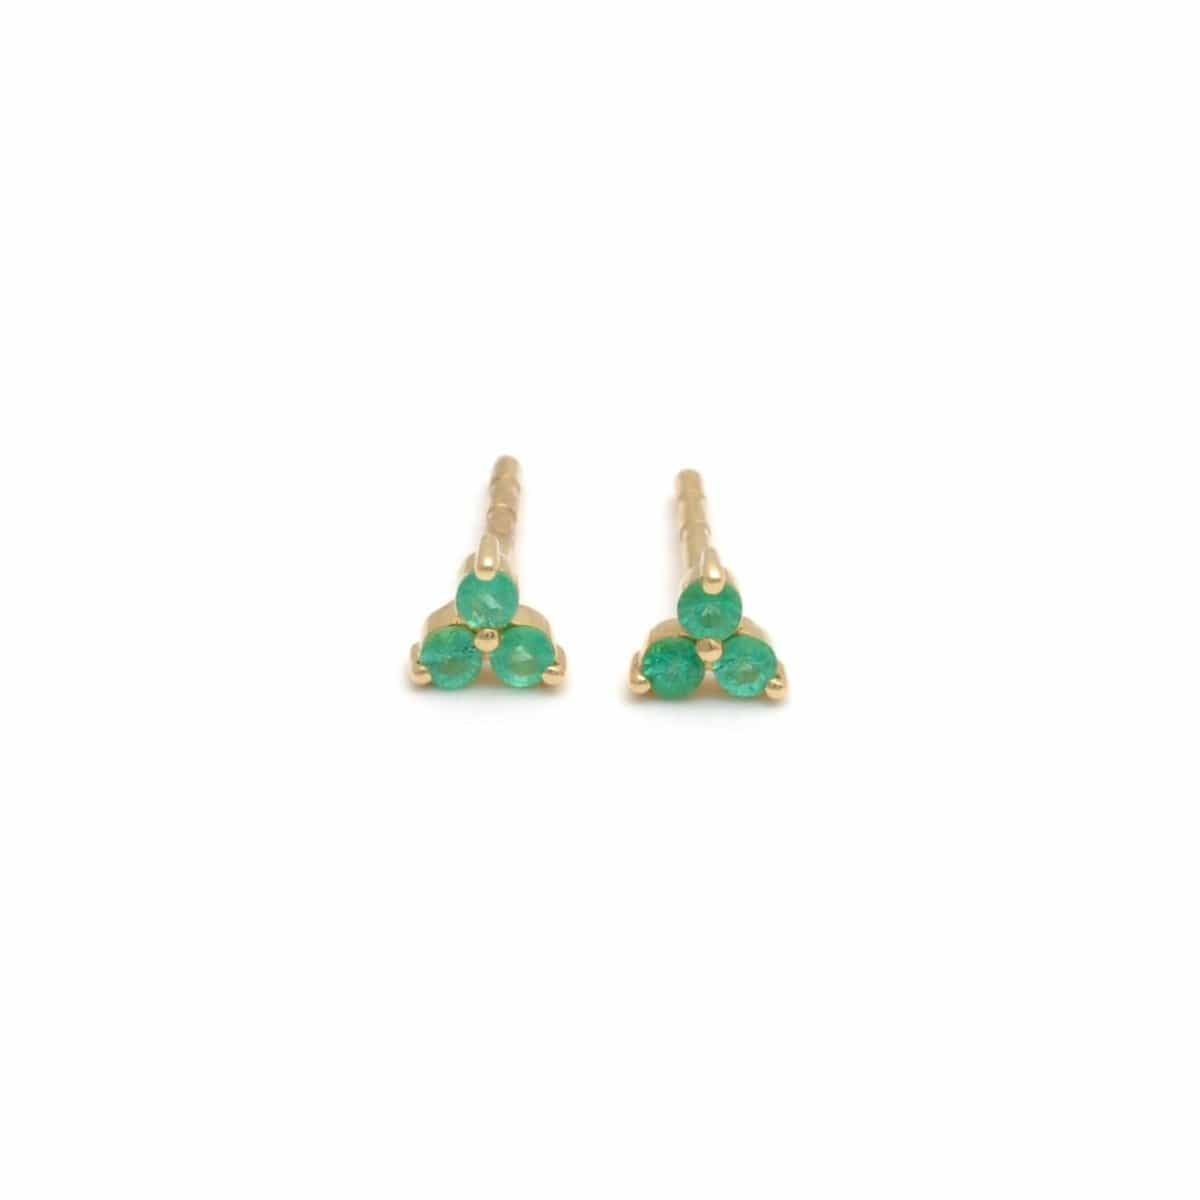 Three Emerald cluster earrings